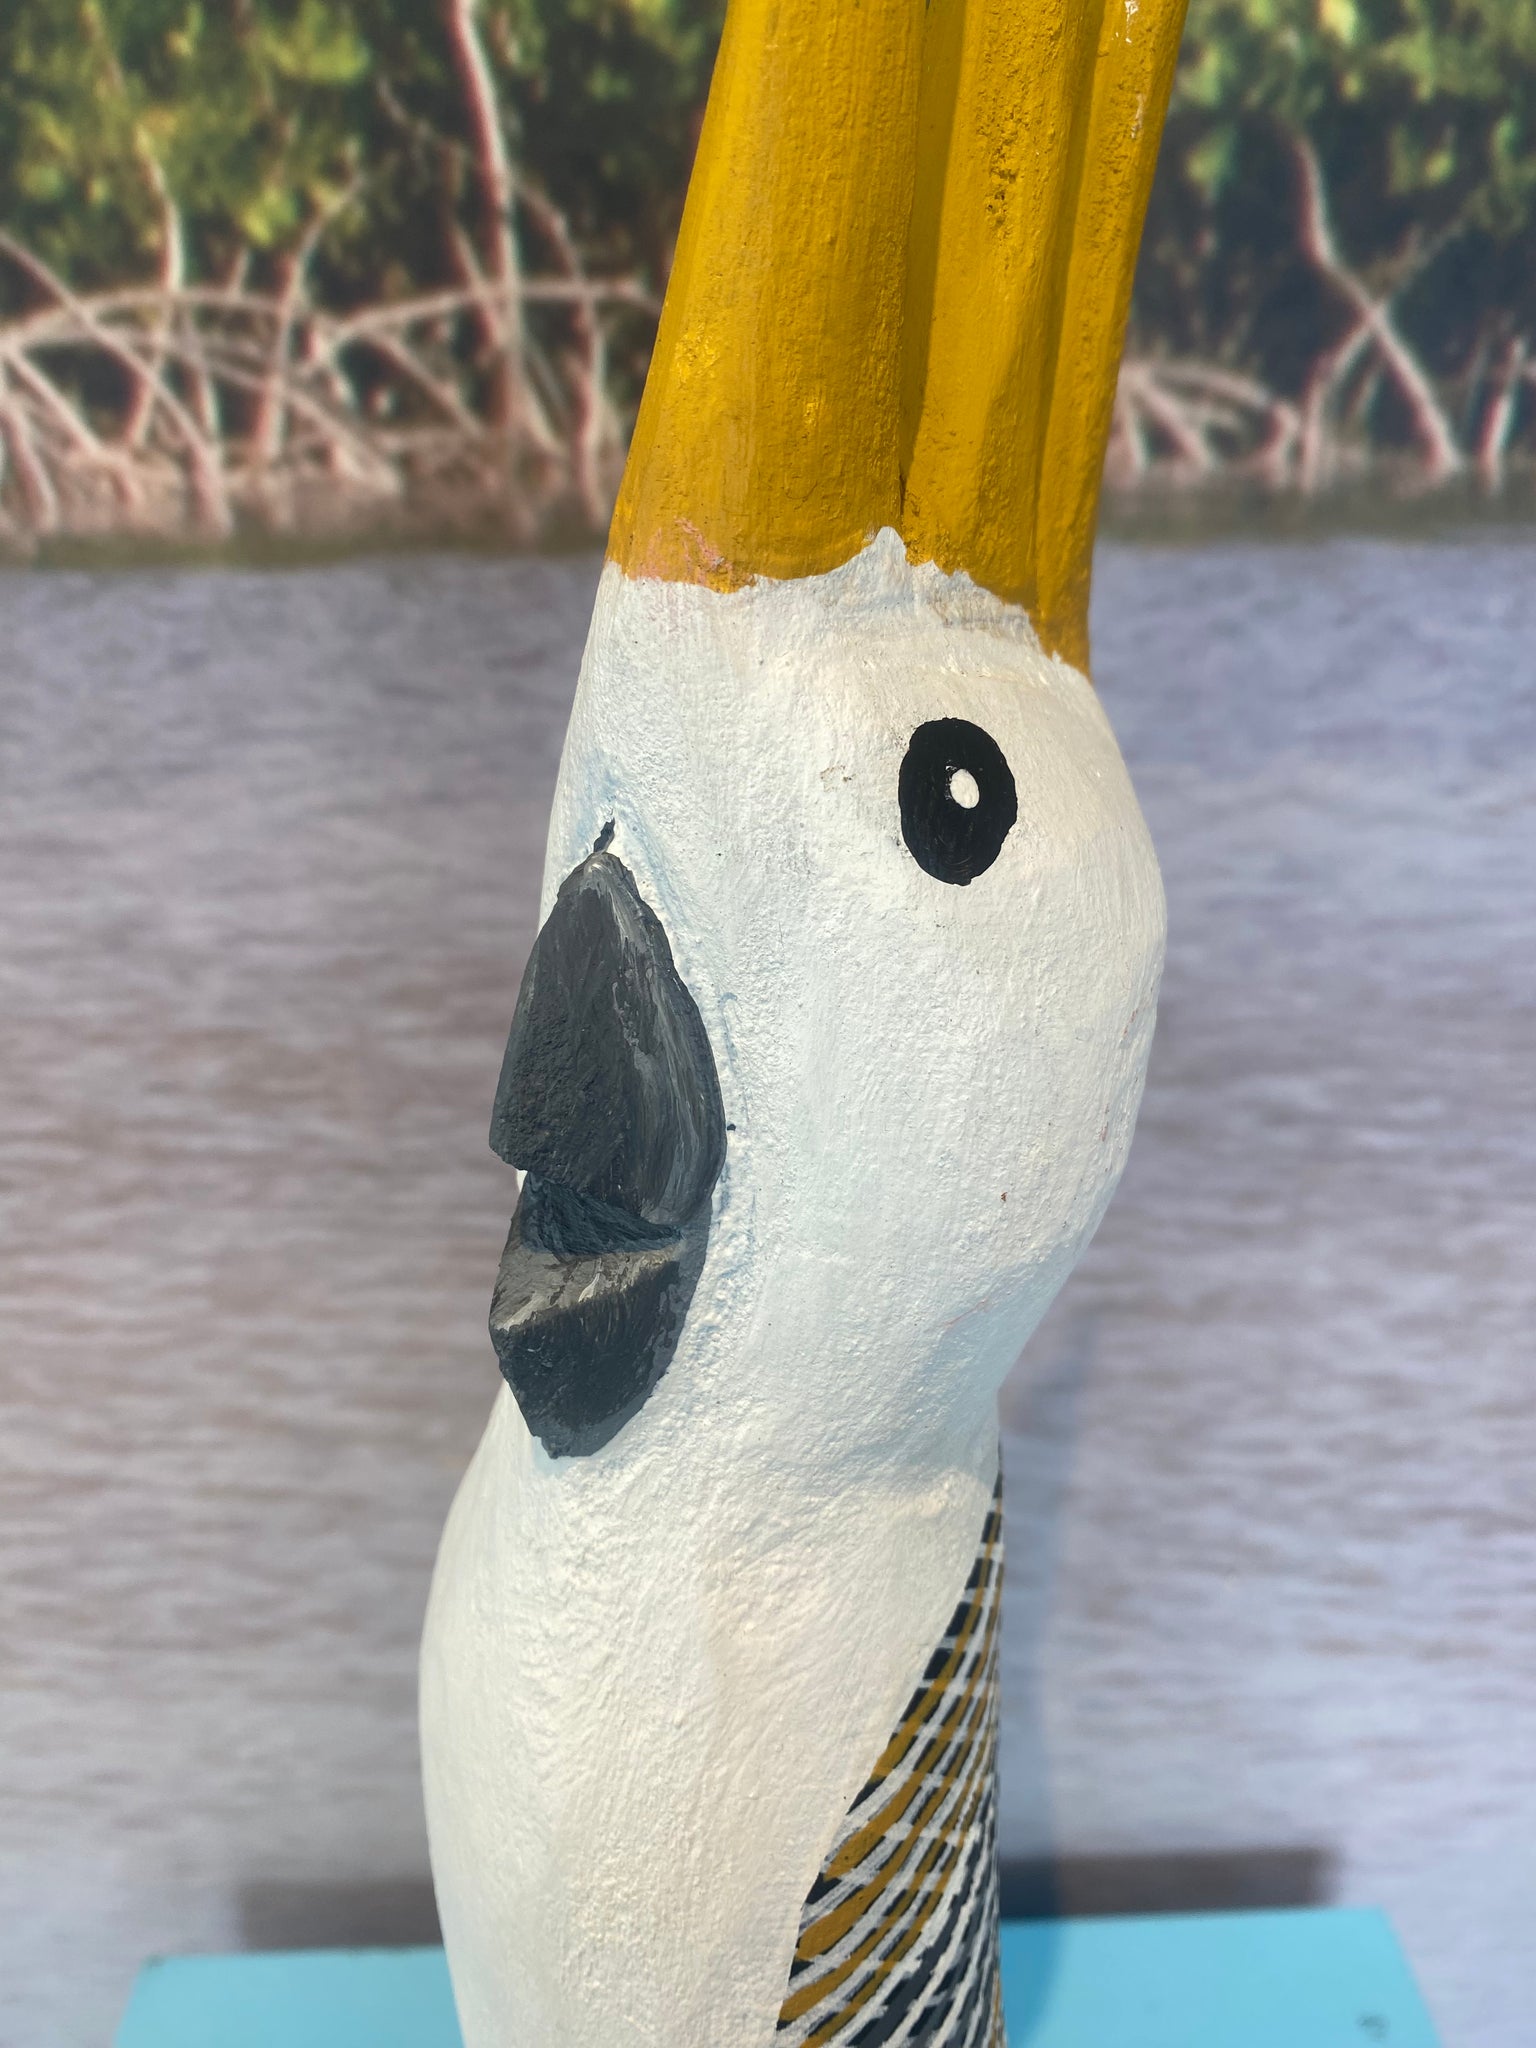 24. Ngarradj (Sulphur Crested Cockatoo)